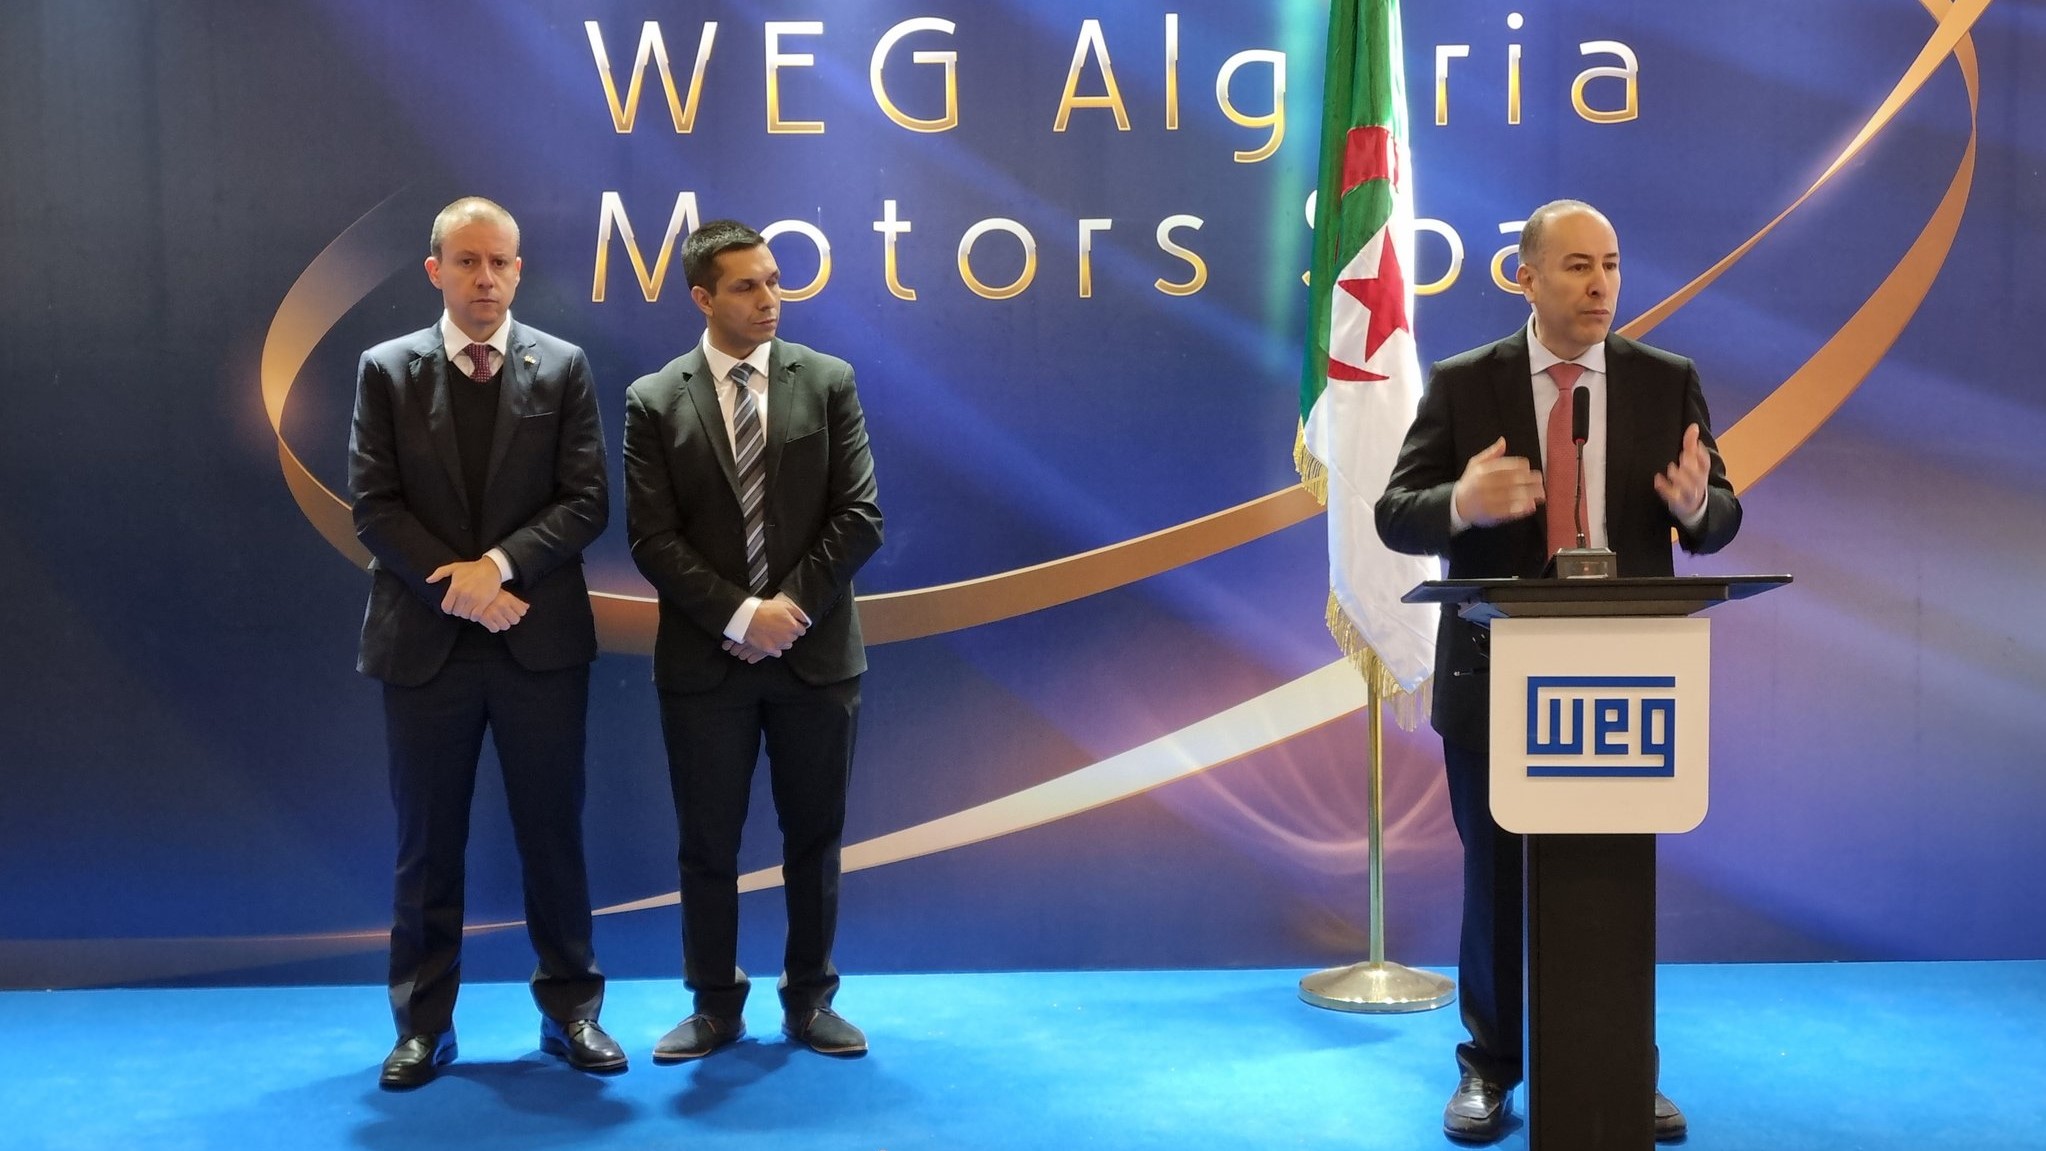 Inauguration of the WEG motors production plant in Algeria